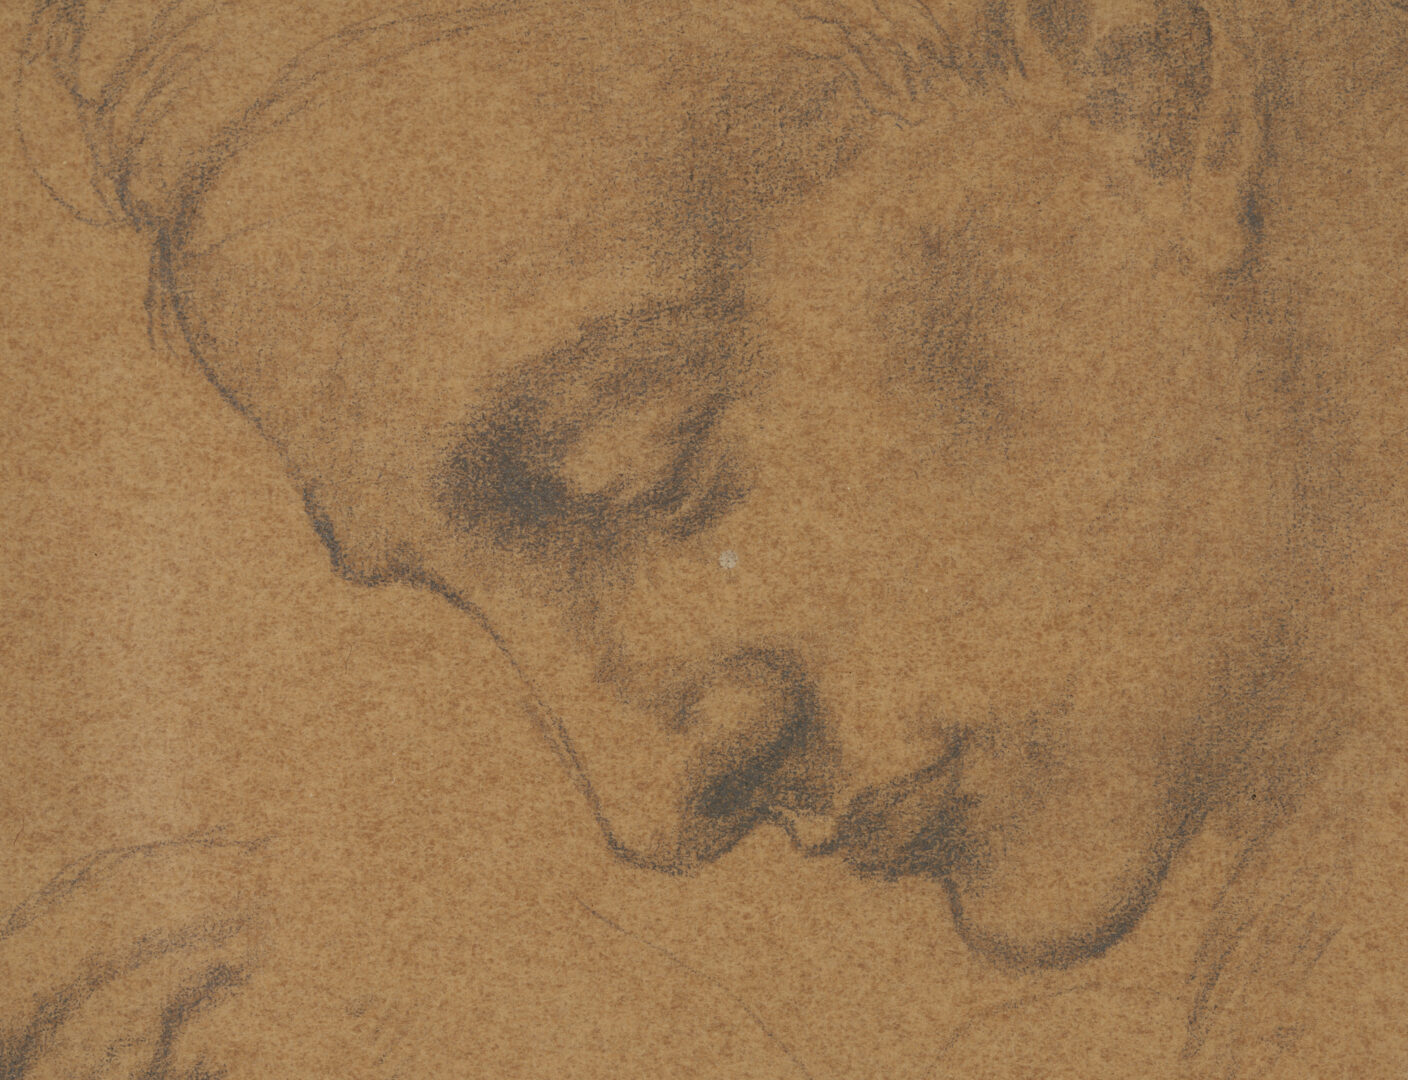 Lot 664: 3 Works on Paper Incl. Weisbuch, Puvis de Chavanne, & After Michelangelo